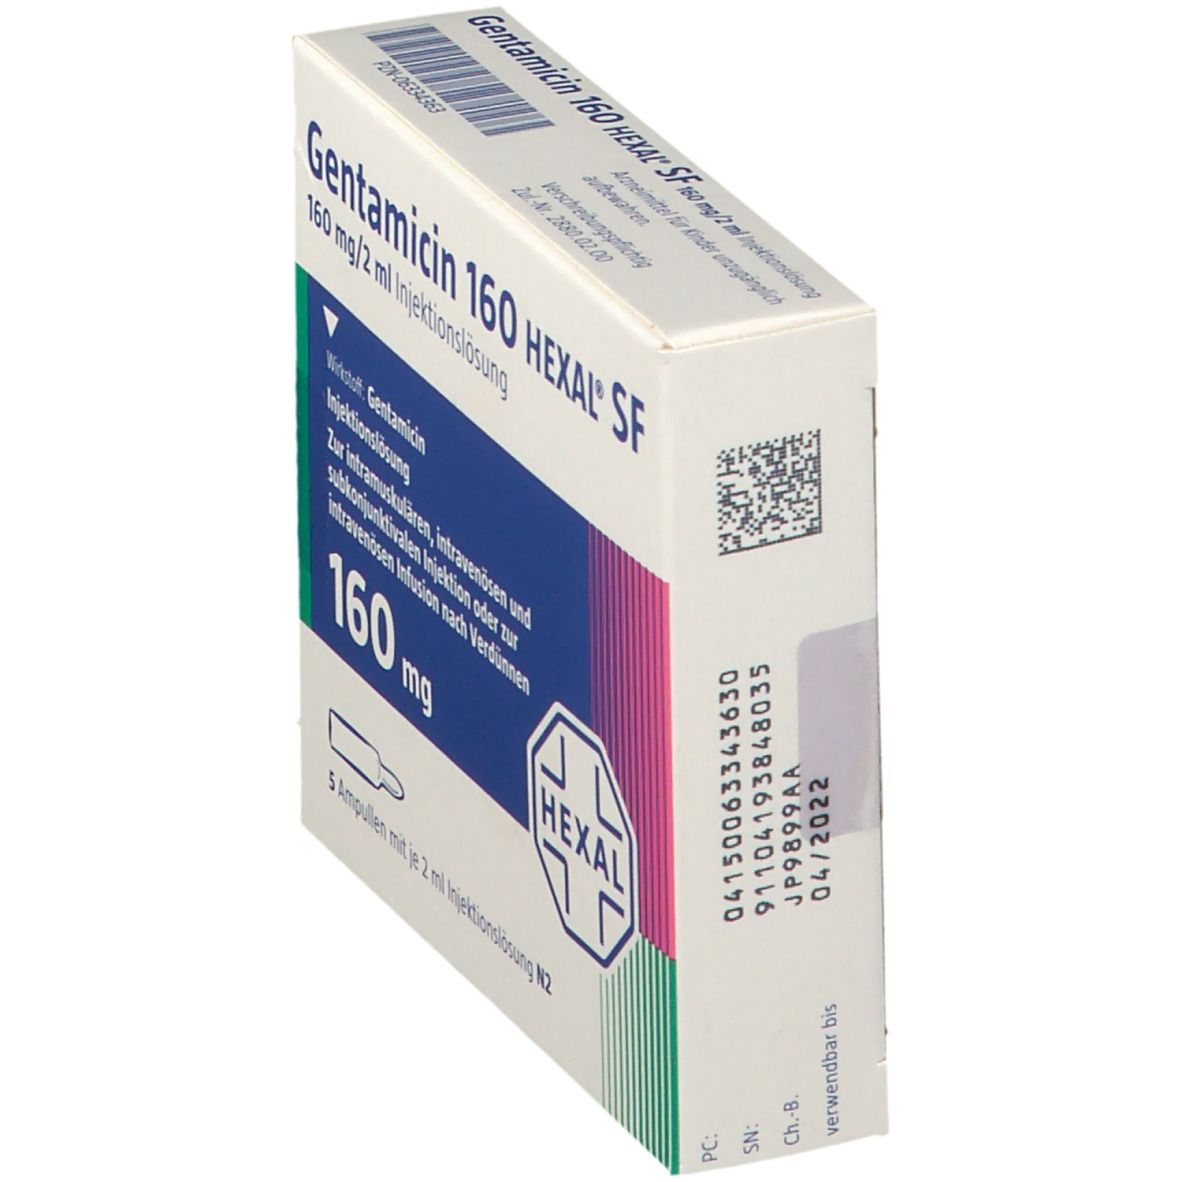 Gentamicin 160 HEXAL® SF